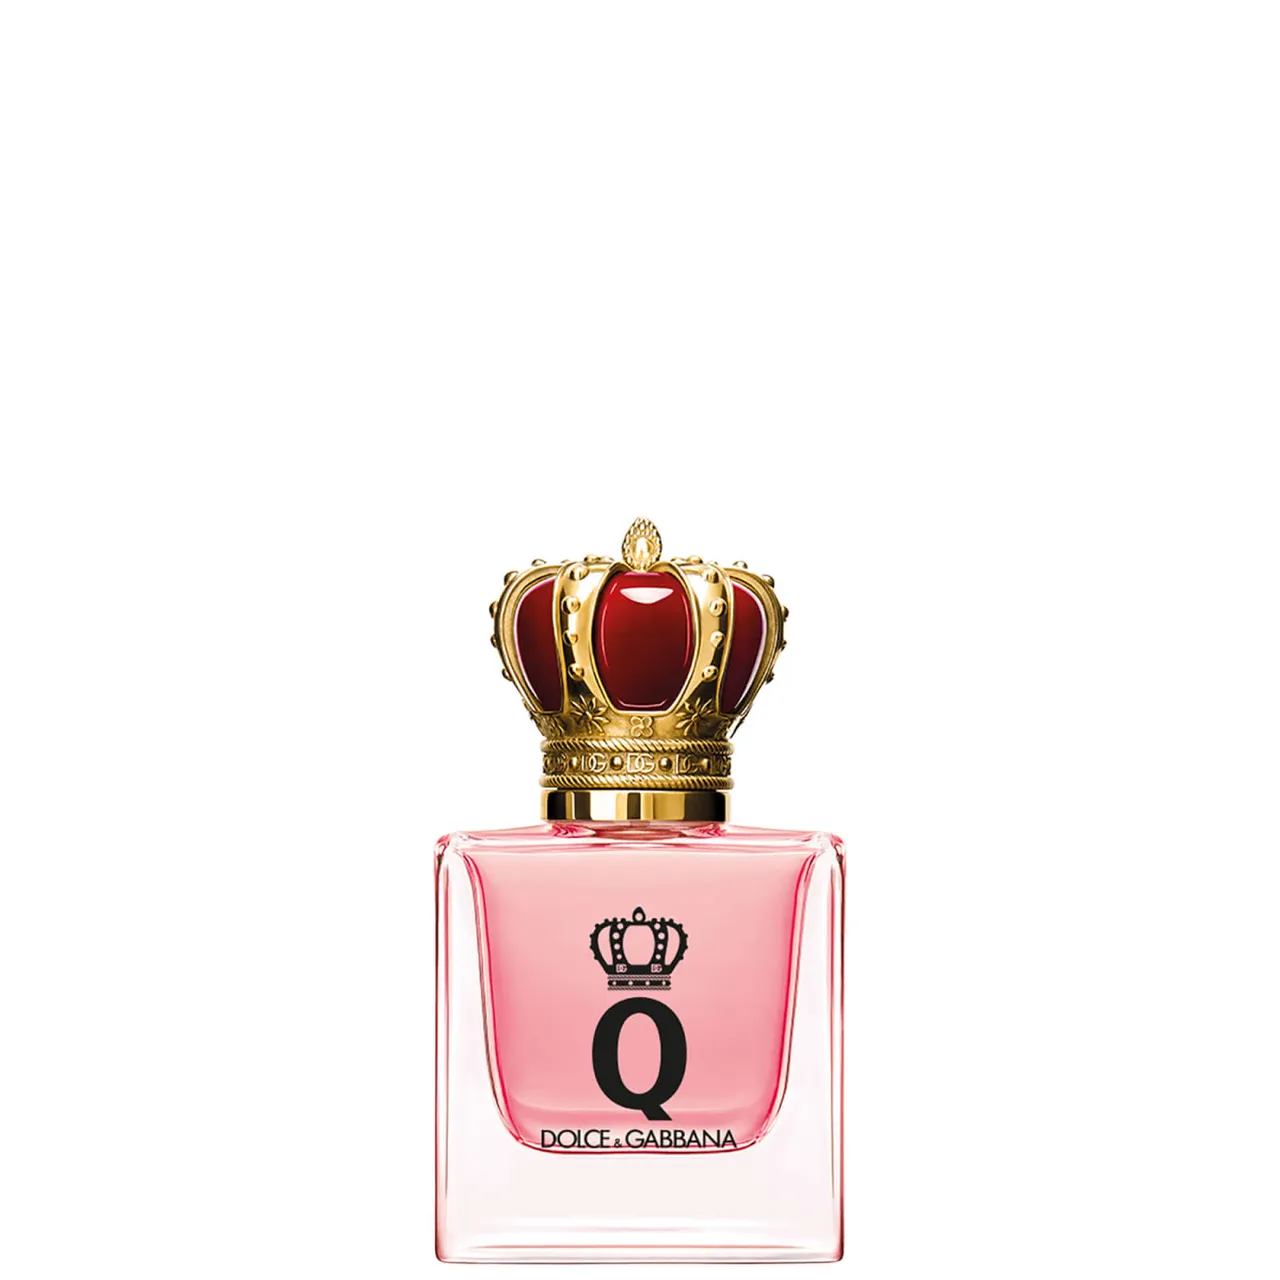 Dolce&Gabbana Q Eau de Parfum 30ml